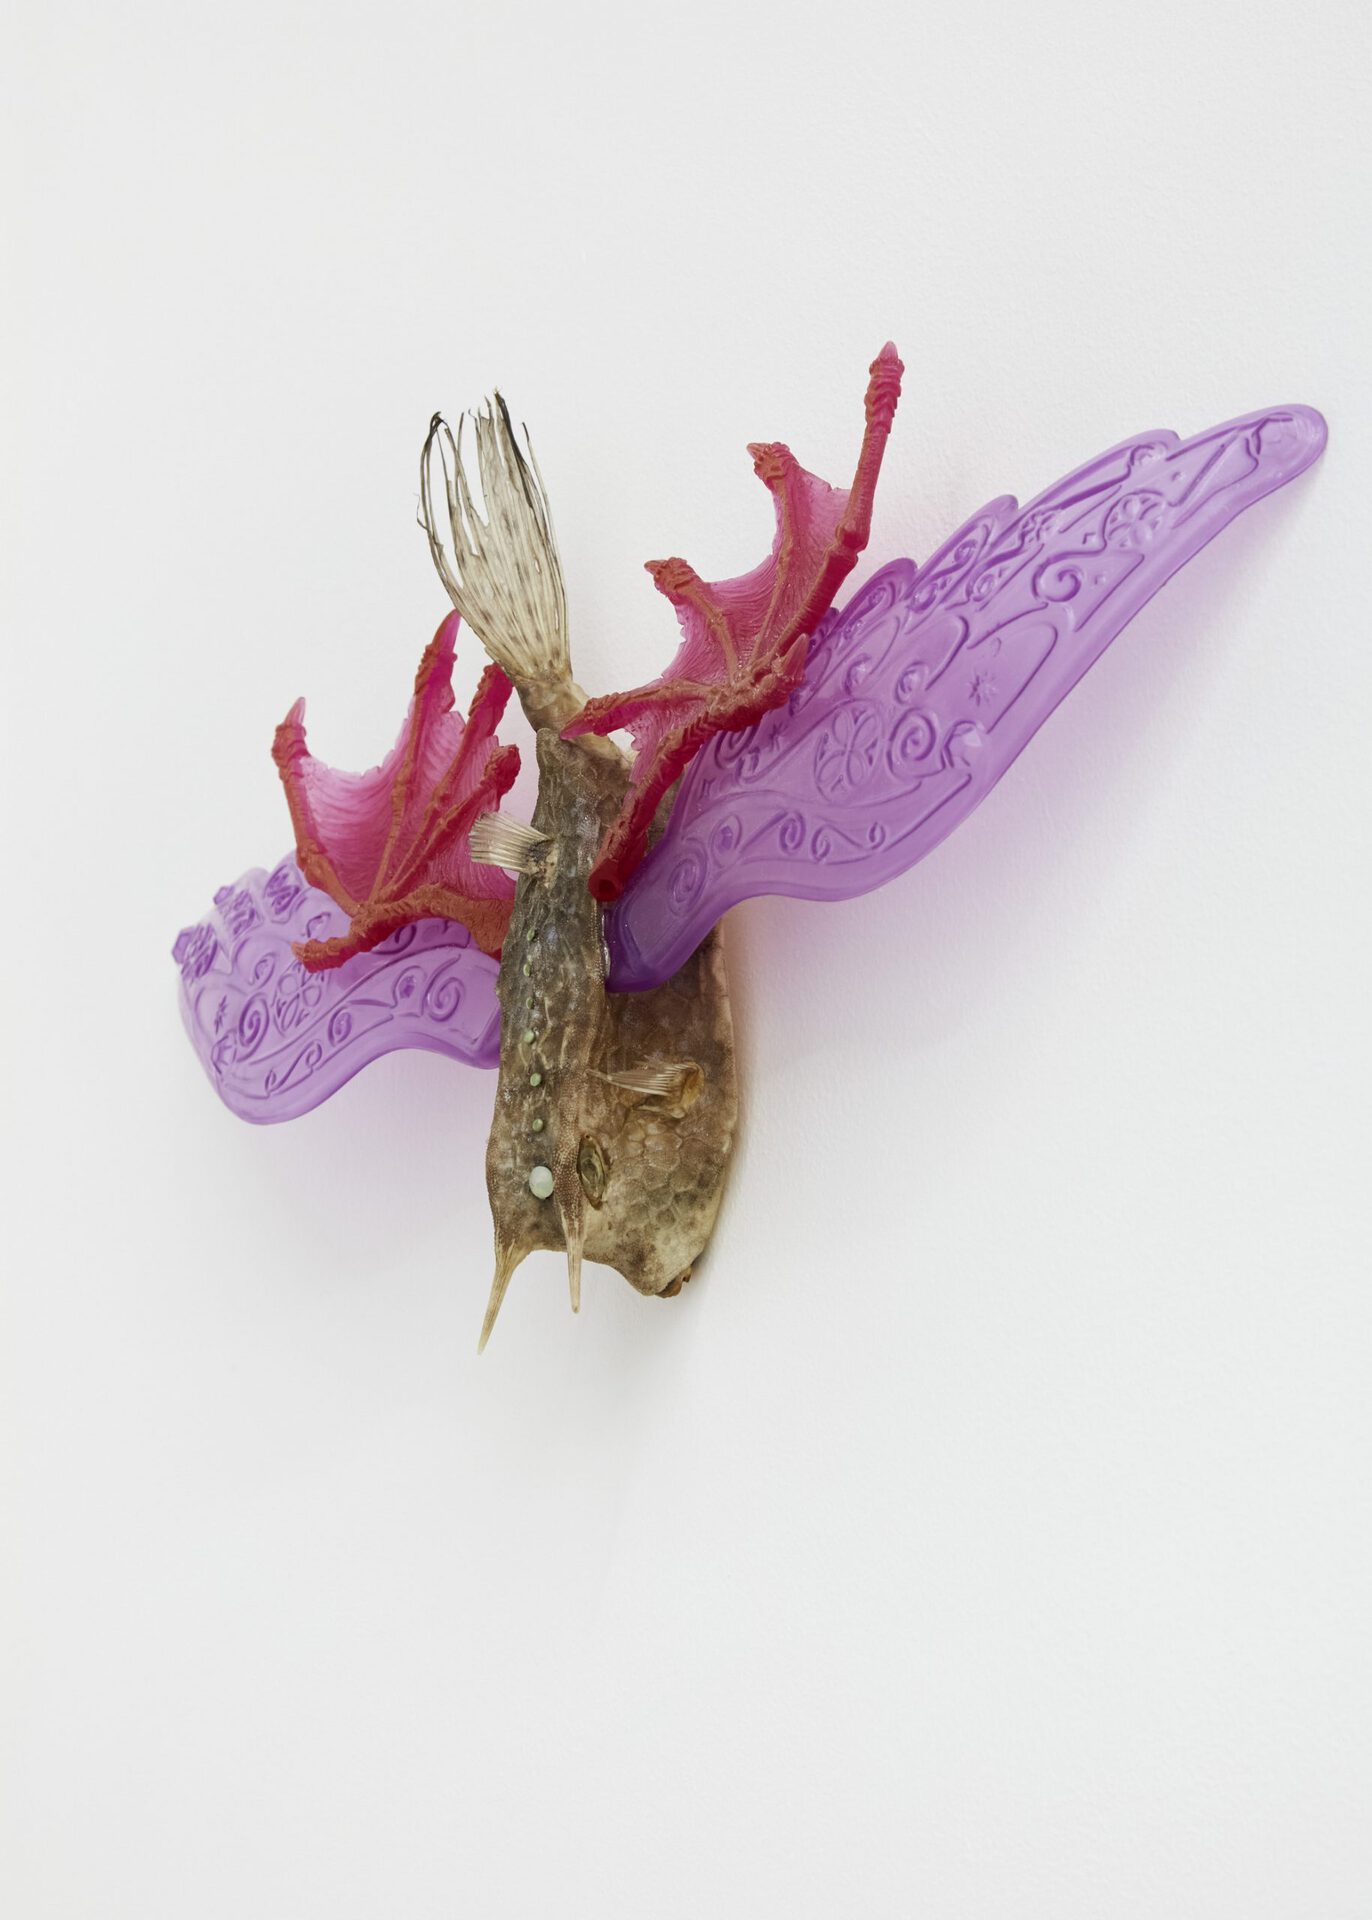 Julie Maurin, You a Fairy, 2021. Lactoria cornuta fish, swarovski strass, two pairs of plastic wings, 41 x 23 x 5 cm